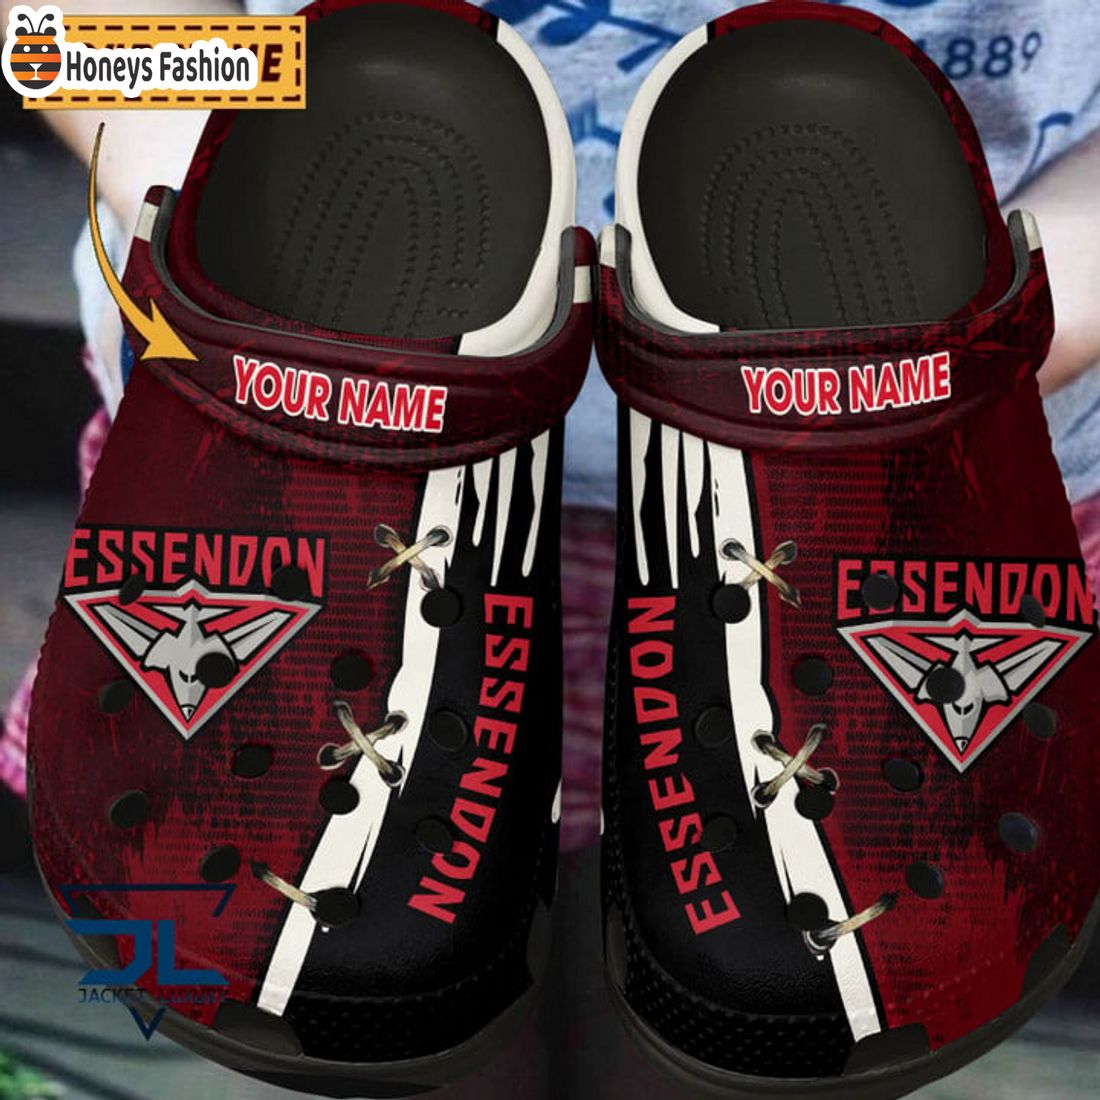 HOT Essendon Football Club Custom Name Crocs Clog Shoes